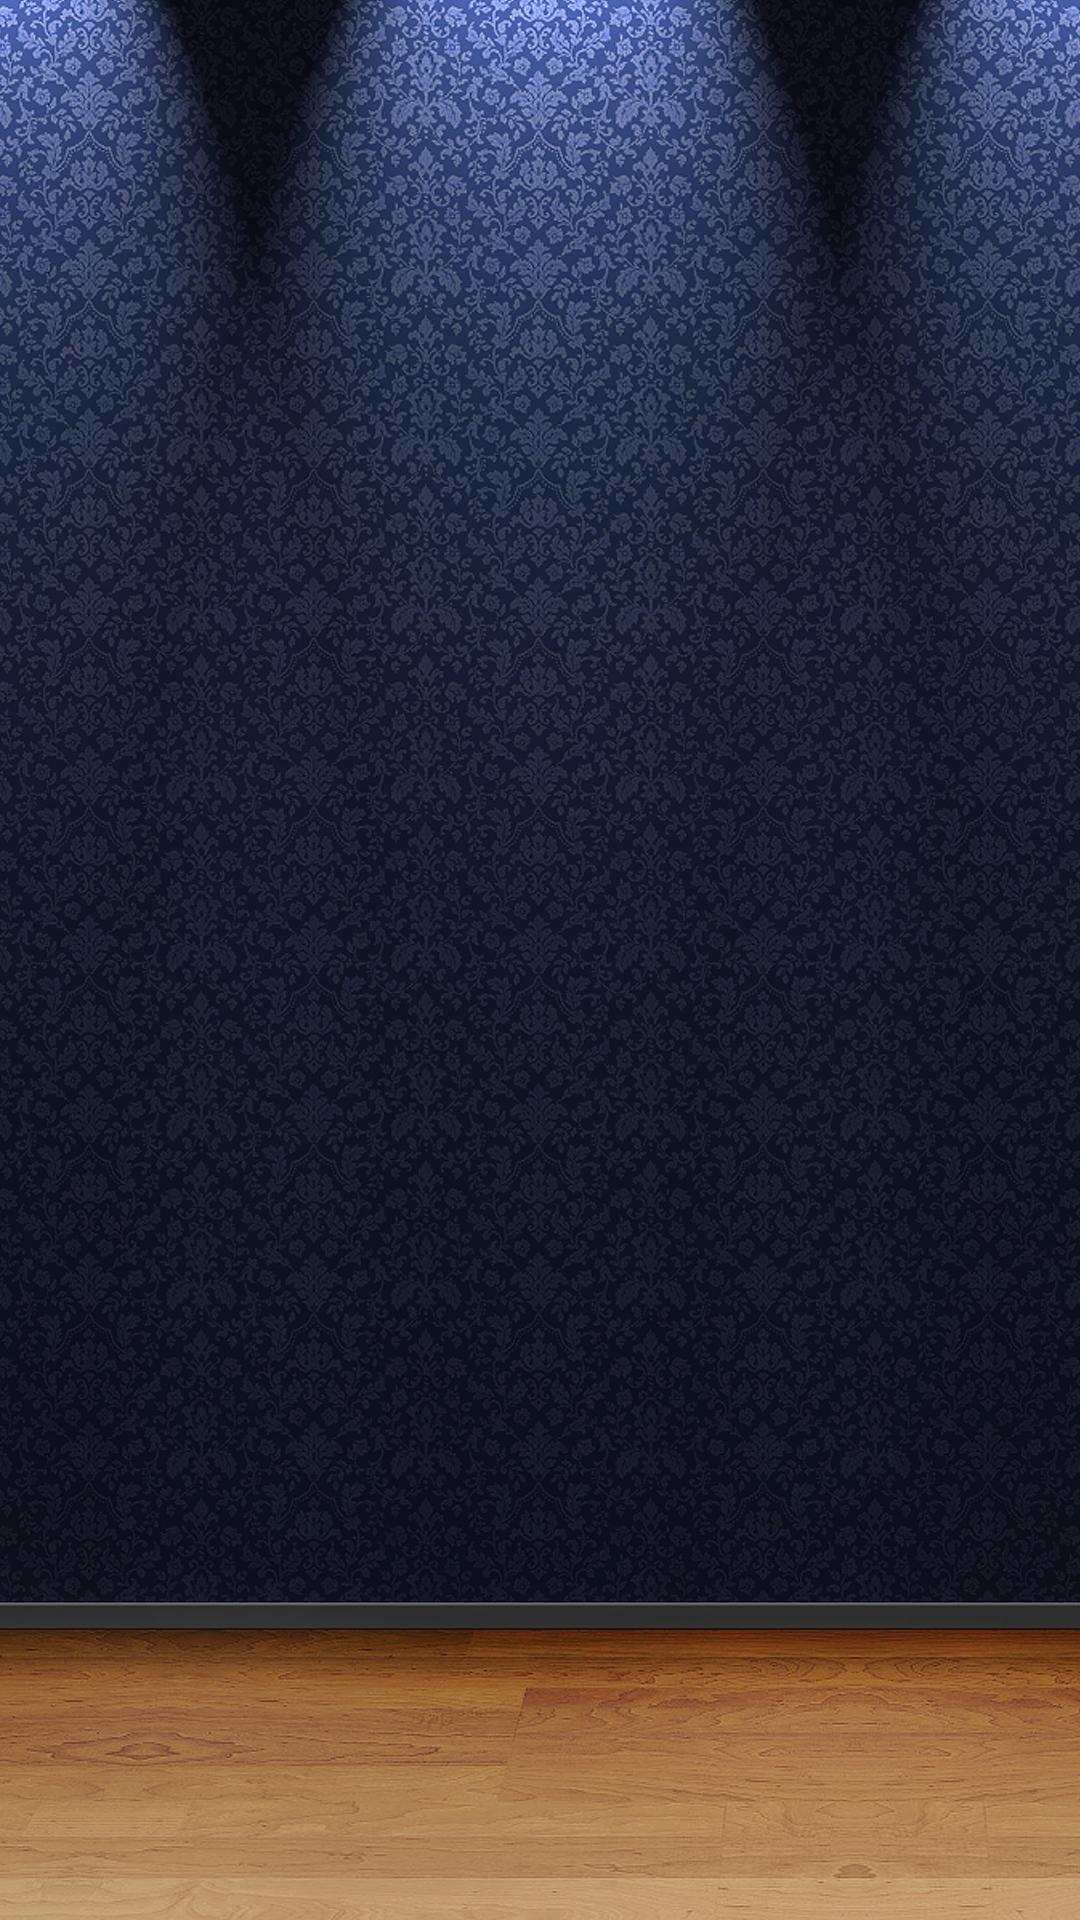 Blue Phone Wallpaper Free Blue Phone Background